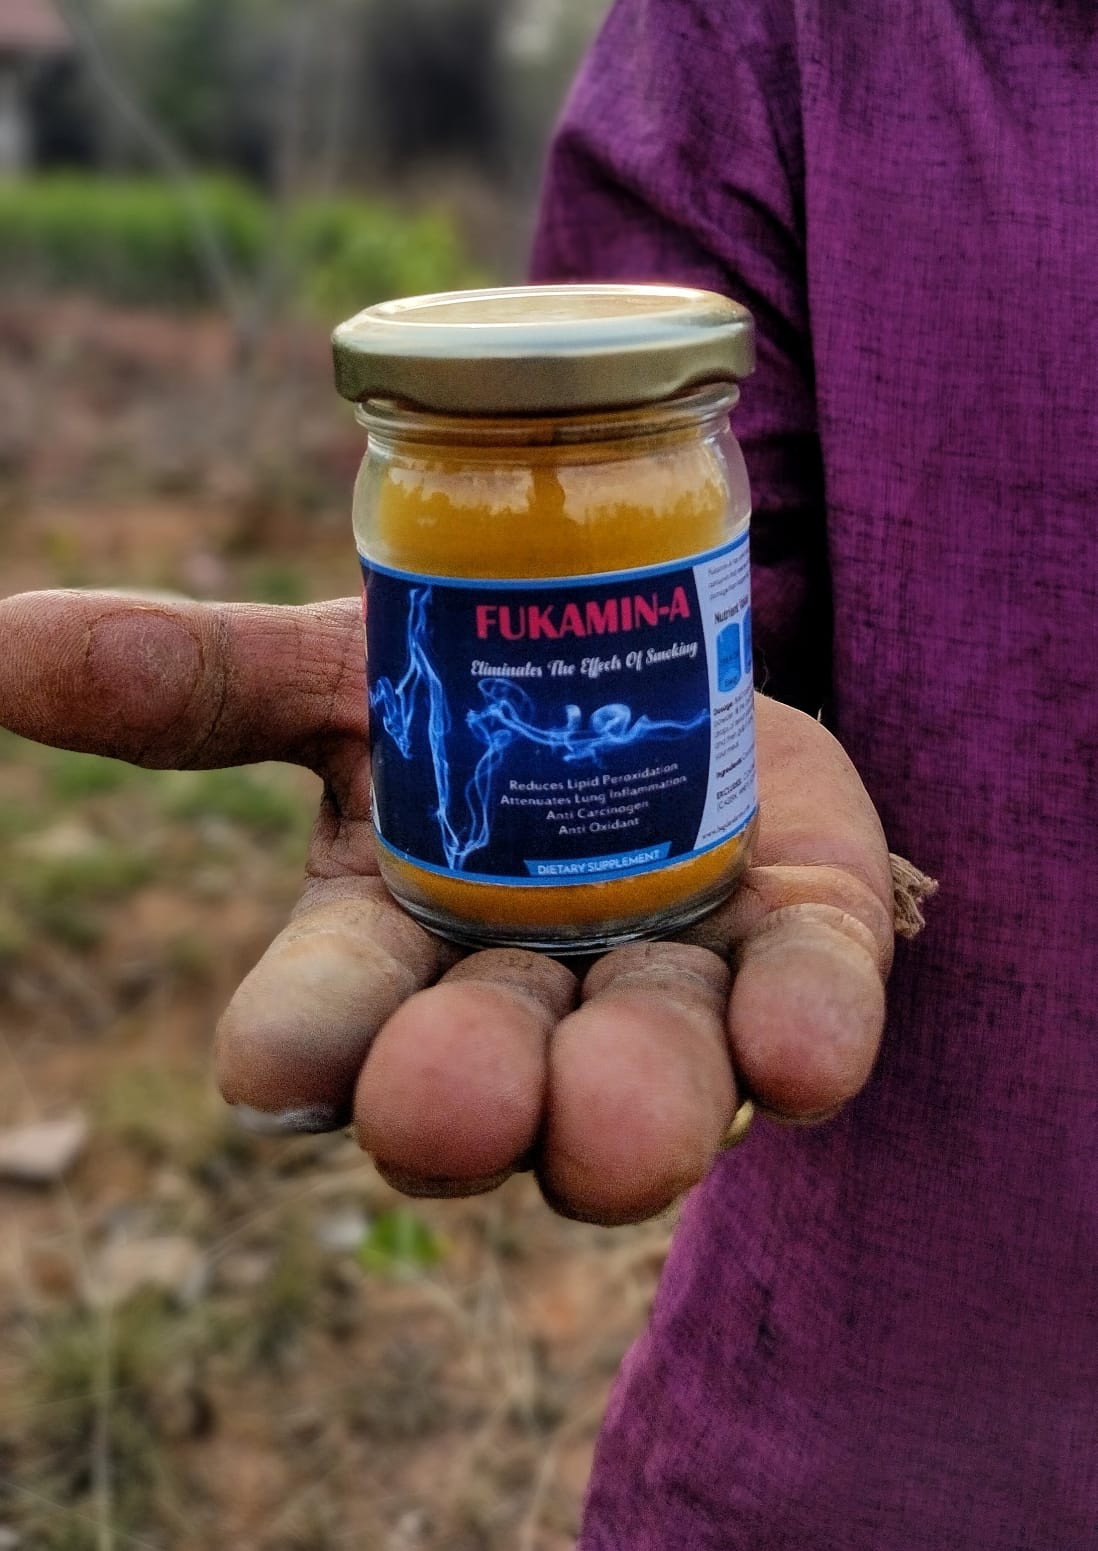 Botella de Fukamin-A de Bagdara Farms